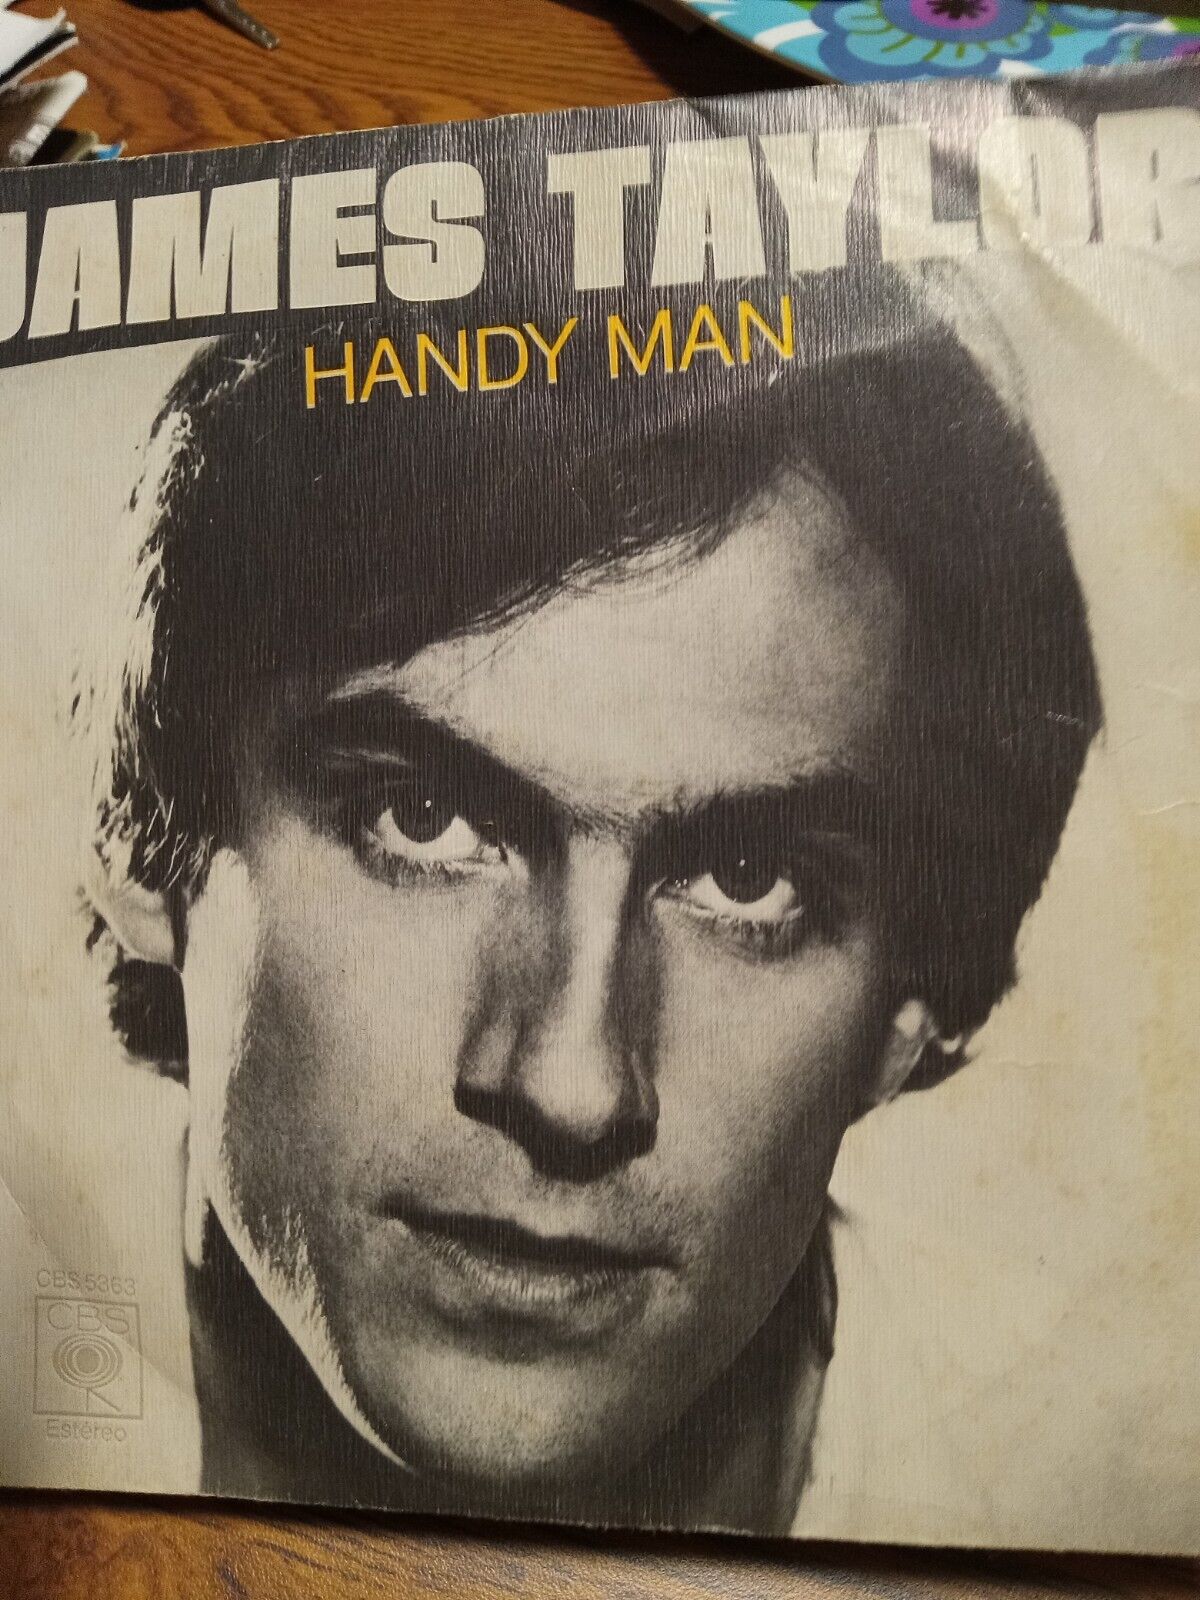 James Taylor 45 w PS Handy Man/Bartender's Blues CBS 5363 VG+ 1977 (SPAIN)